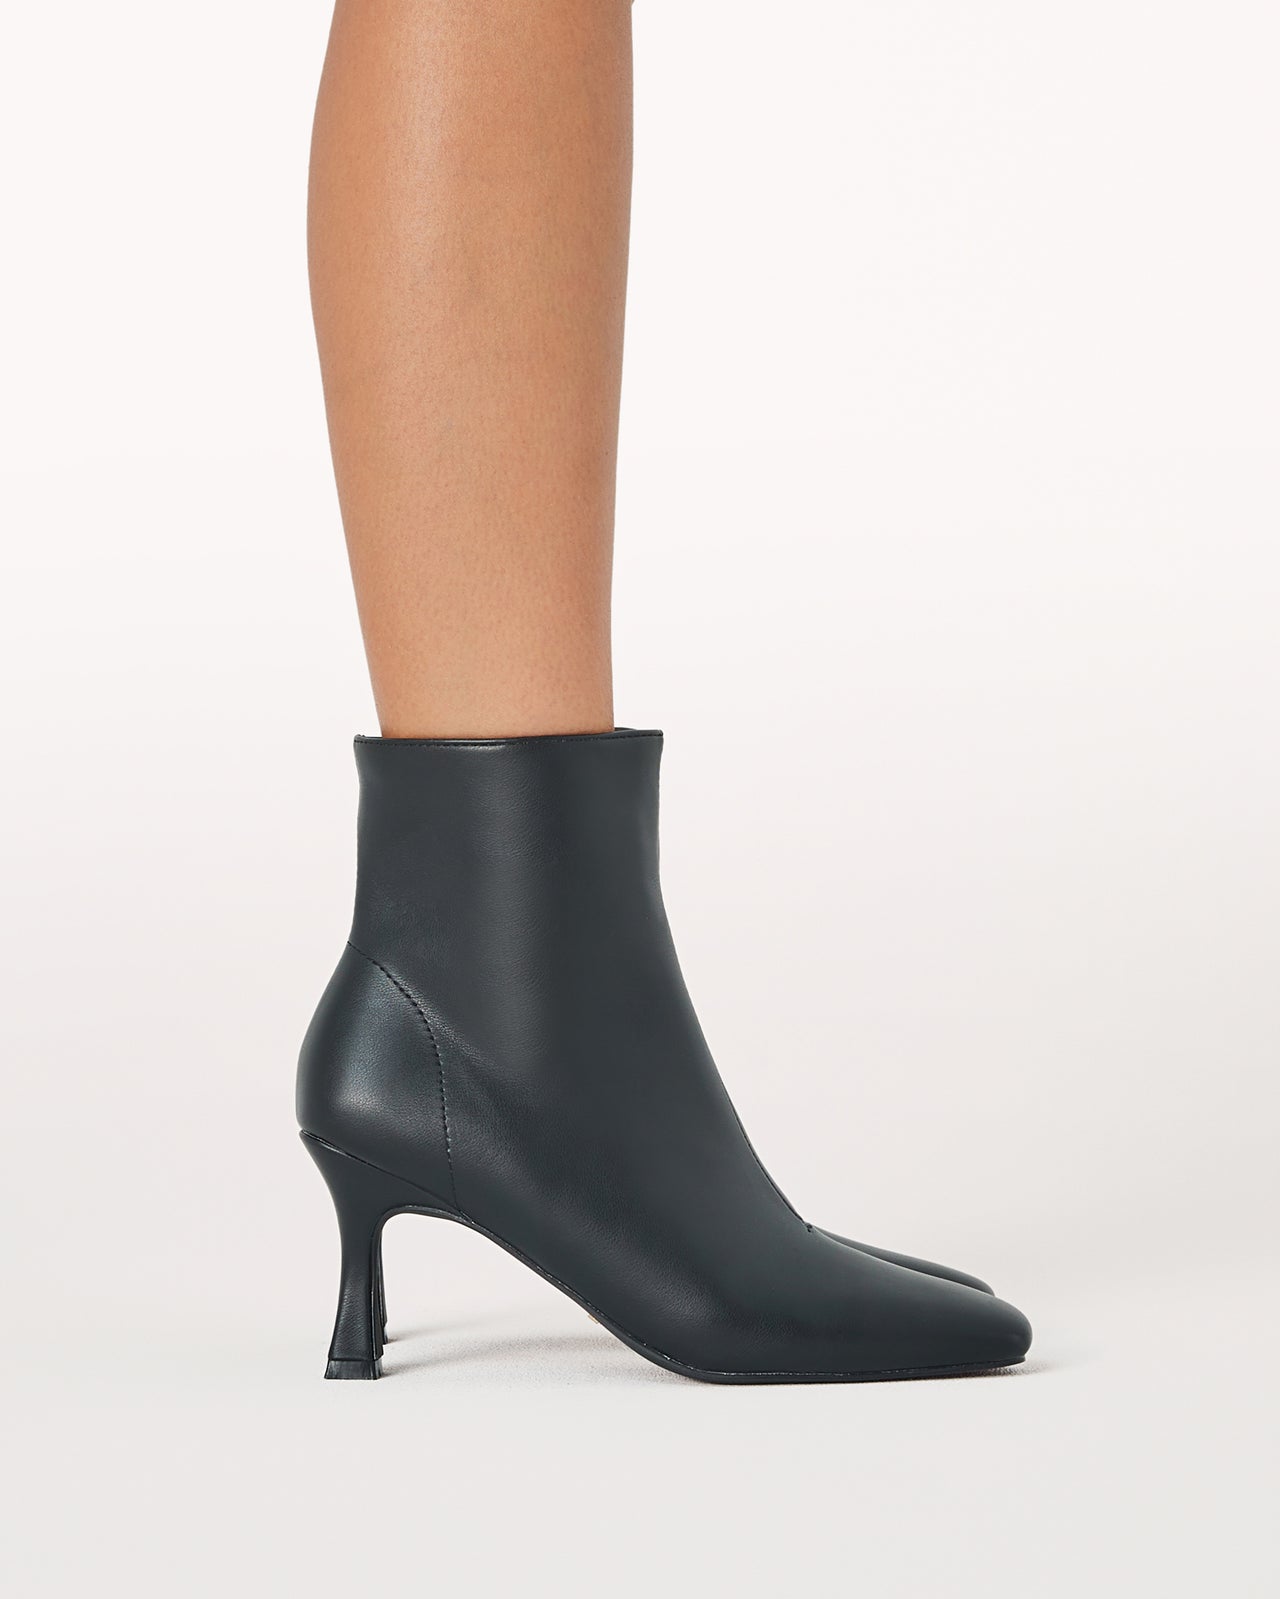 Chyana Bootie Black, Boot Shoe by Billini | LIT Boutique